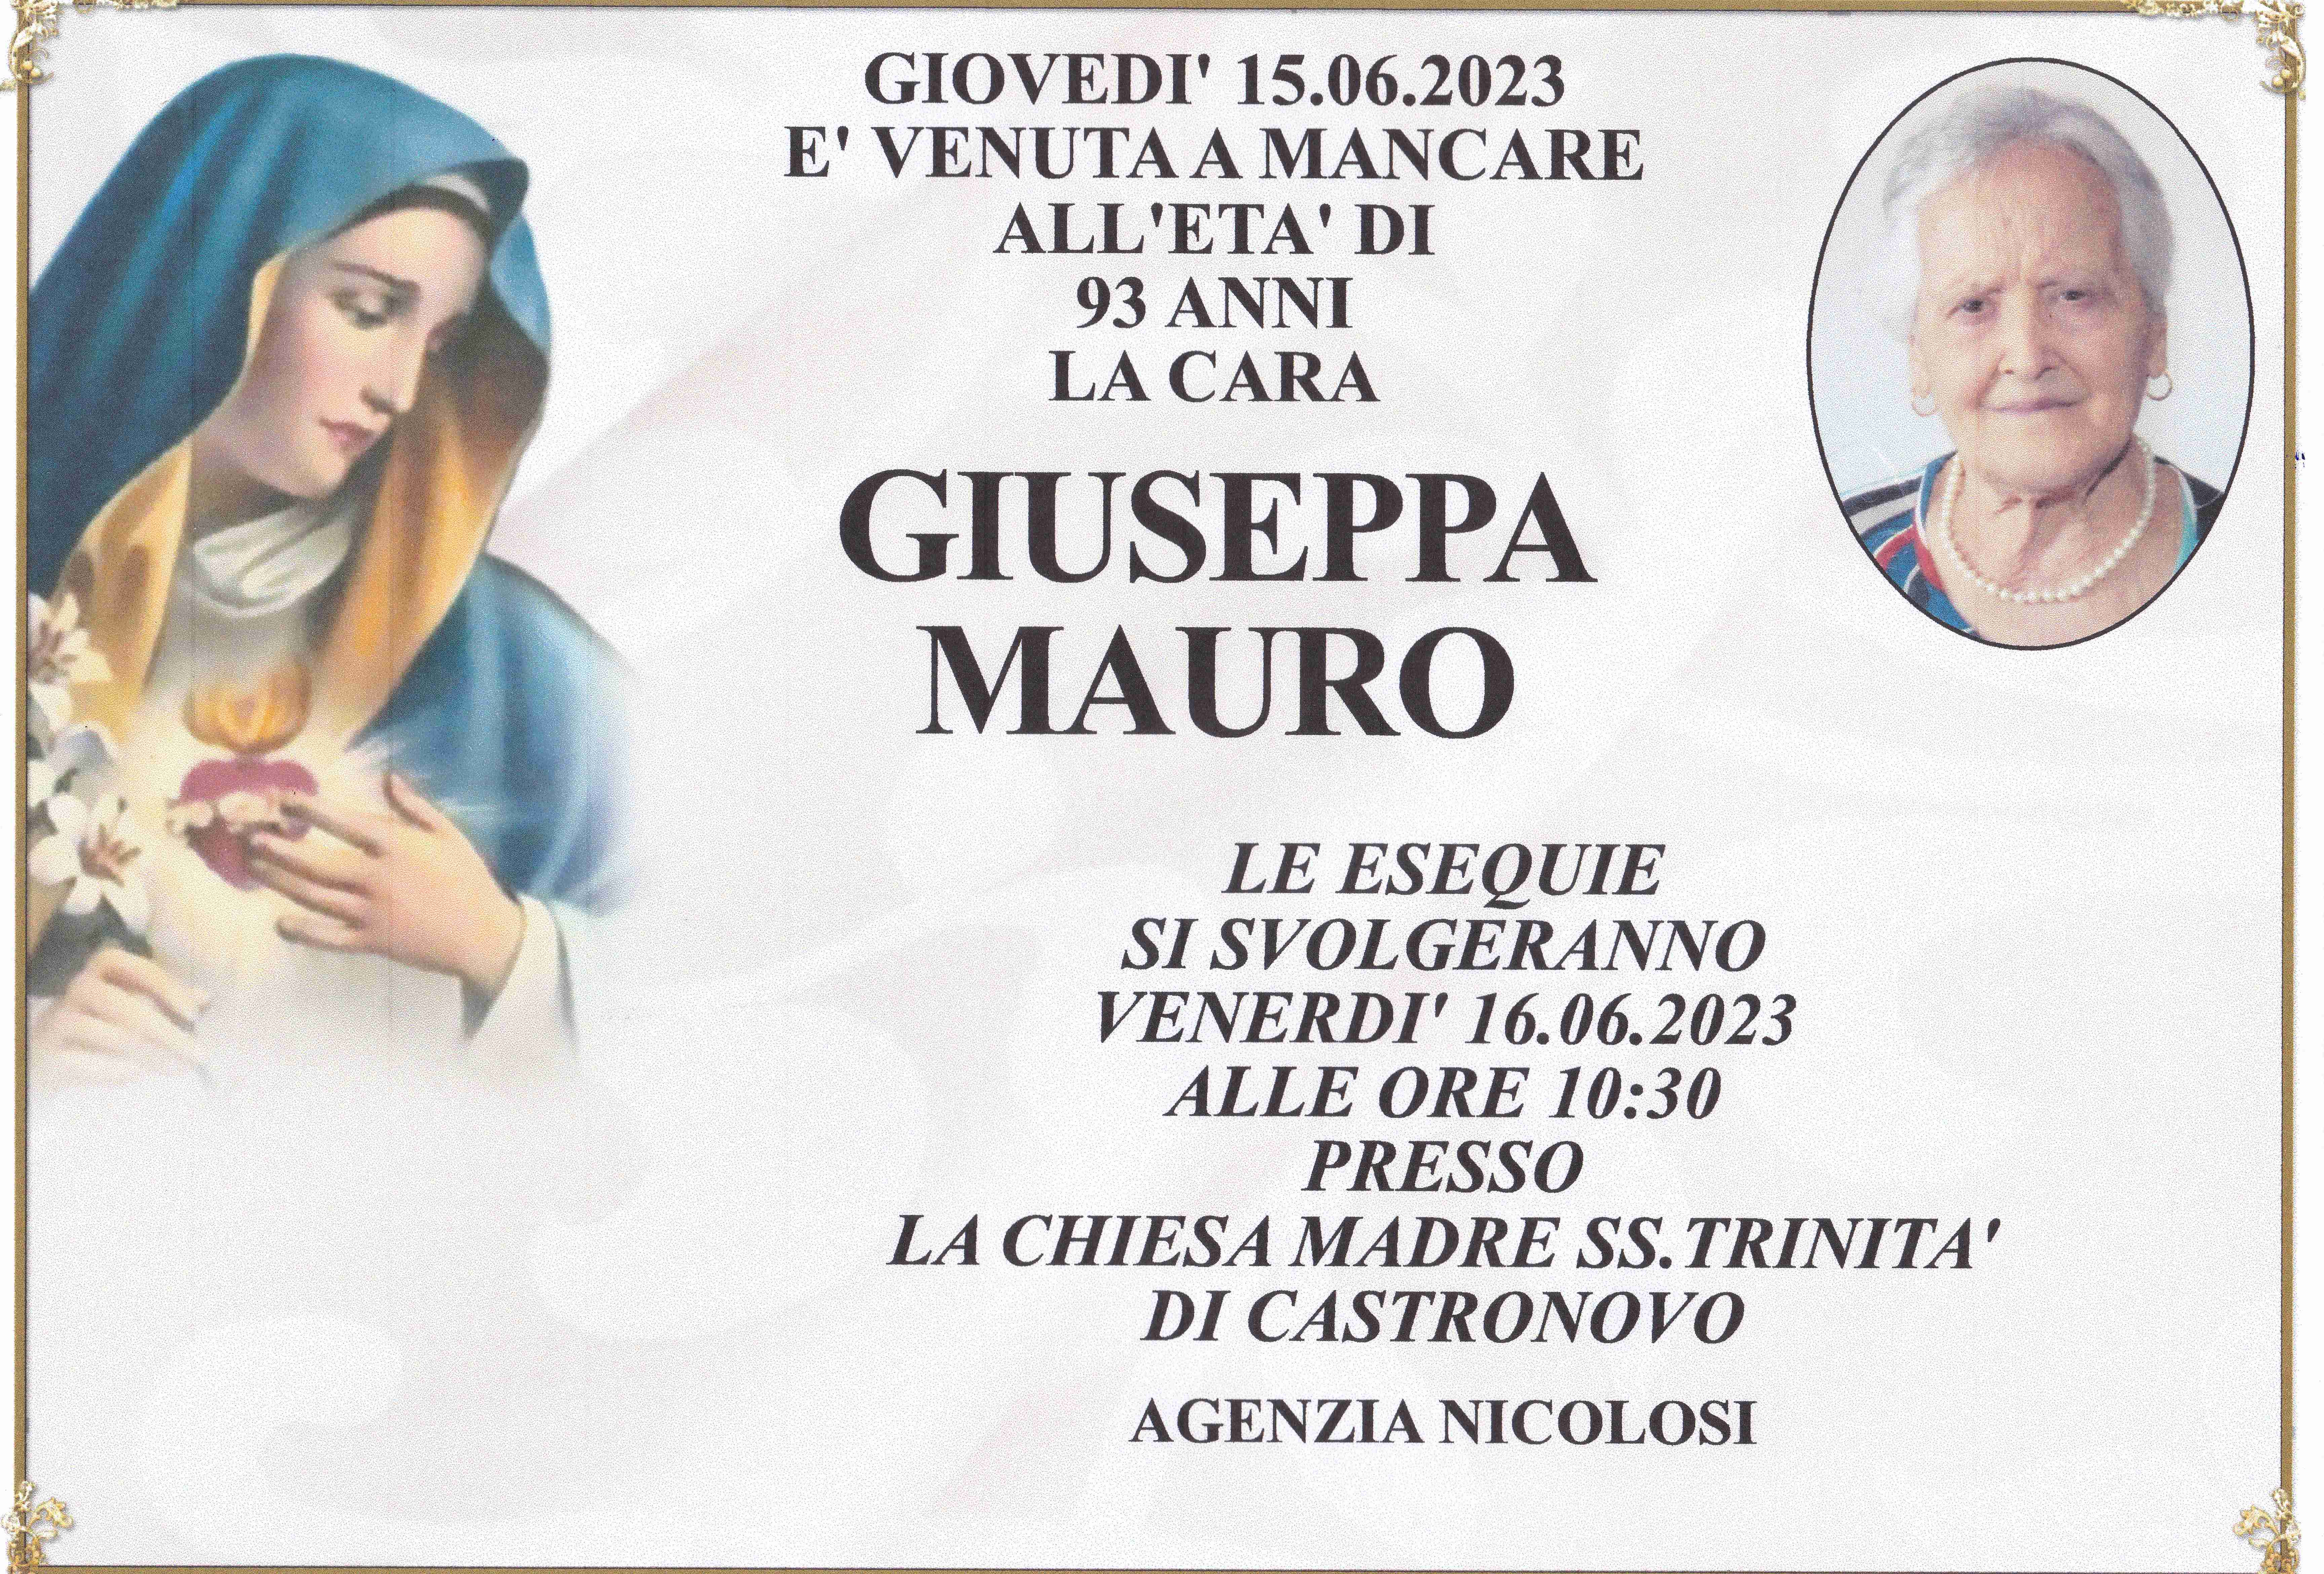 Giuseppa Mauro